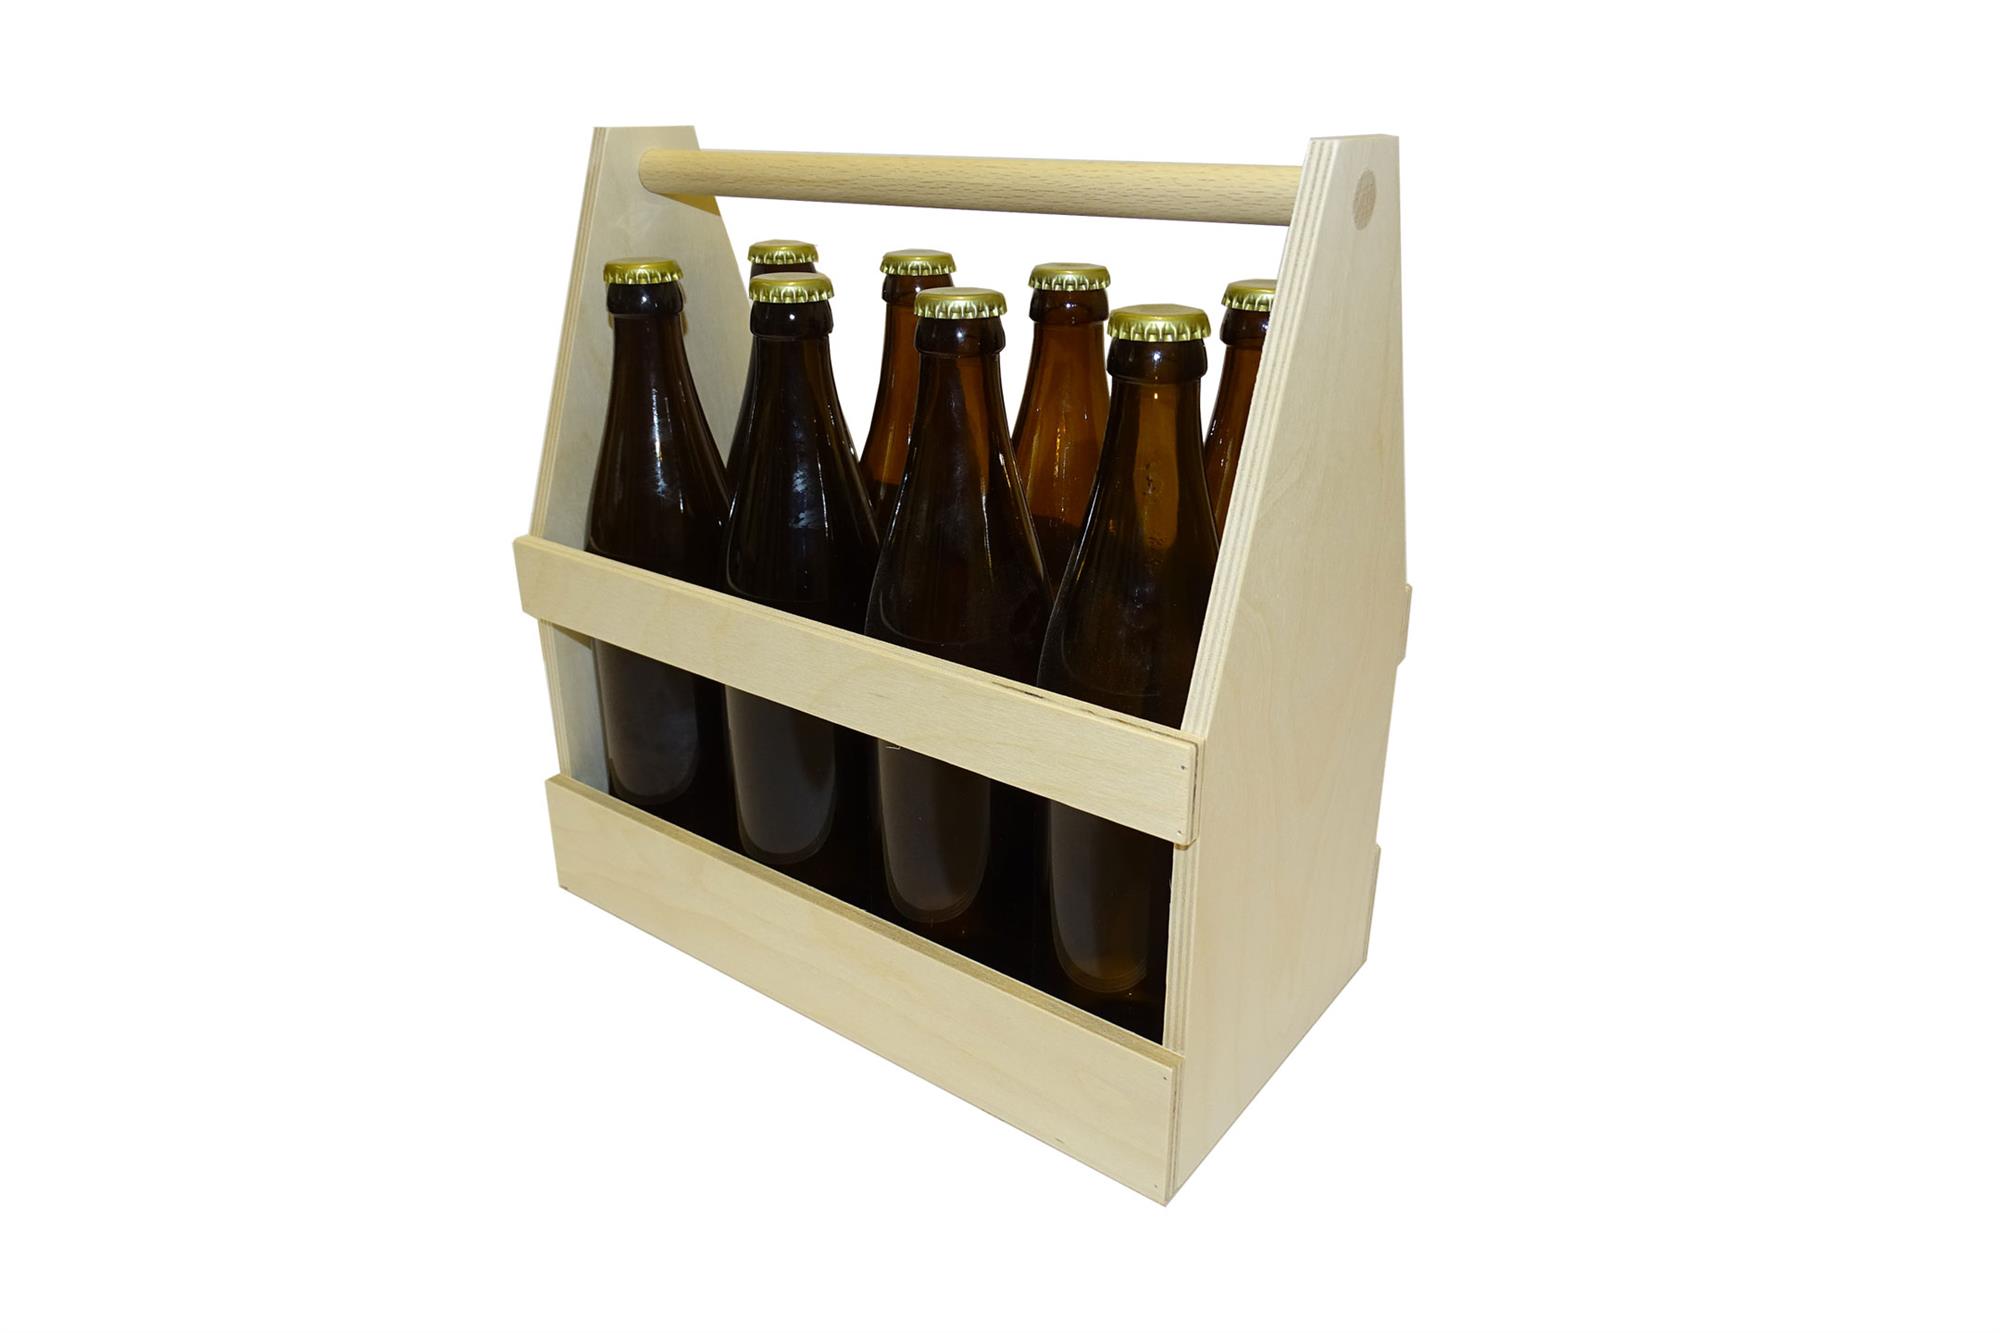 de:Flaschenträger | für 8 x 0,5 Liter | Bierflaschen!-_::_-!en:Bottle carrier | for 8 x 0.5 liter | beer bottles!-_::_-!